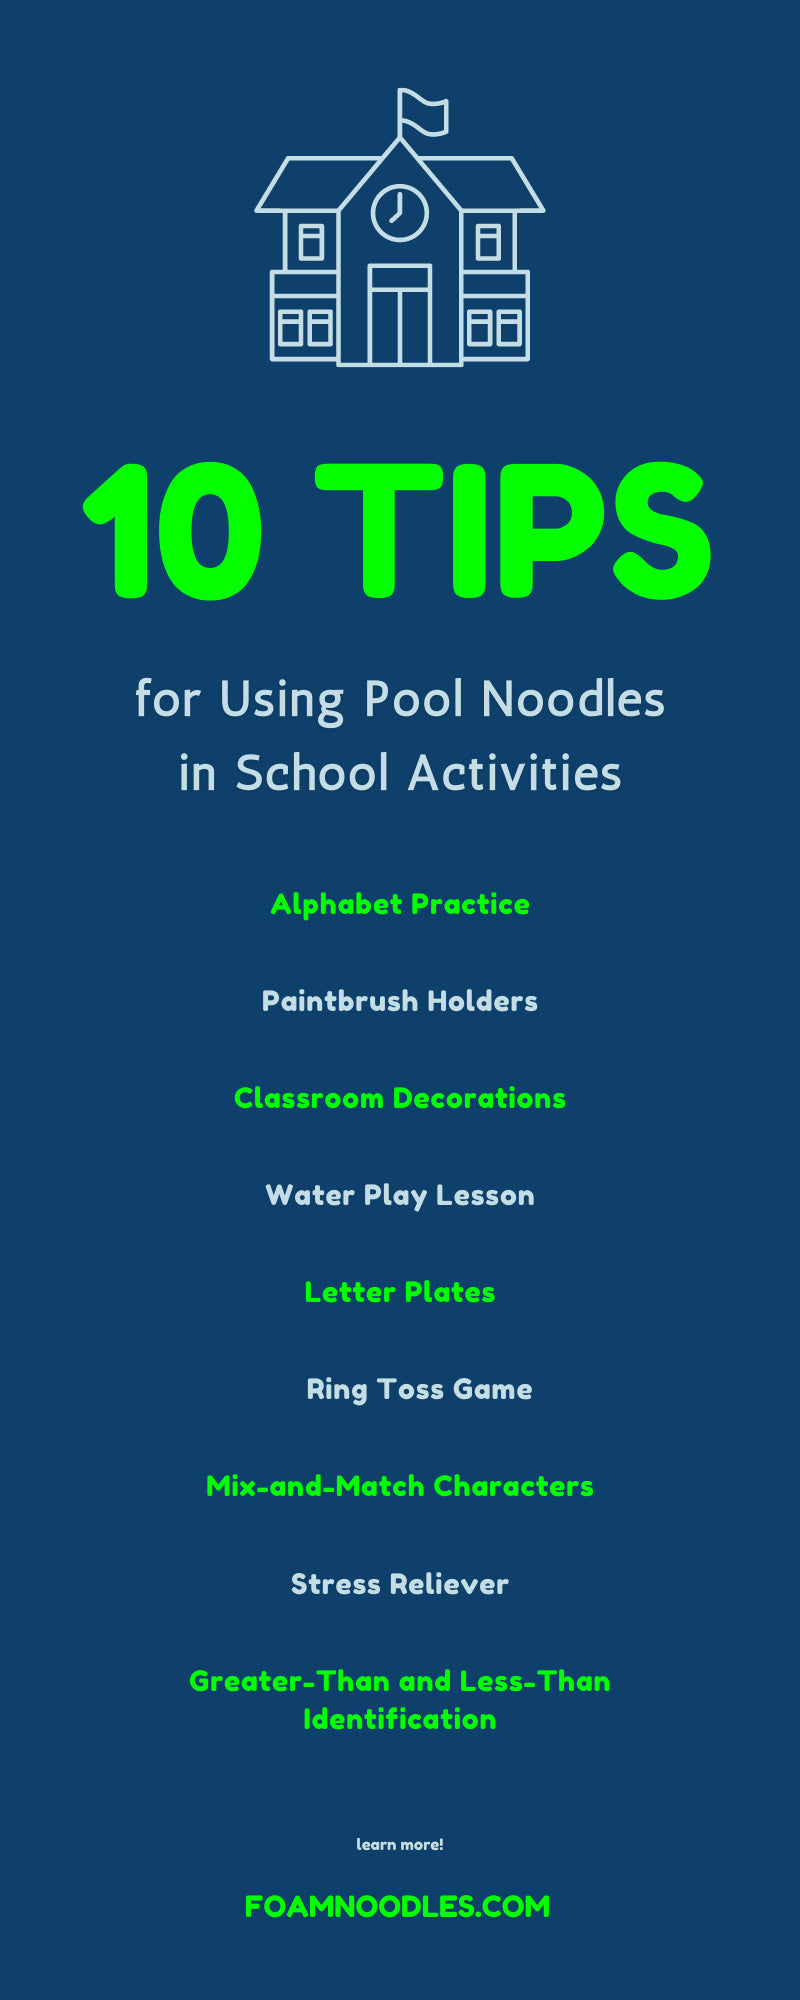 10 Tips for Using Pool Noodles in School Activities